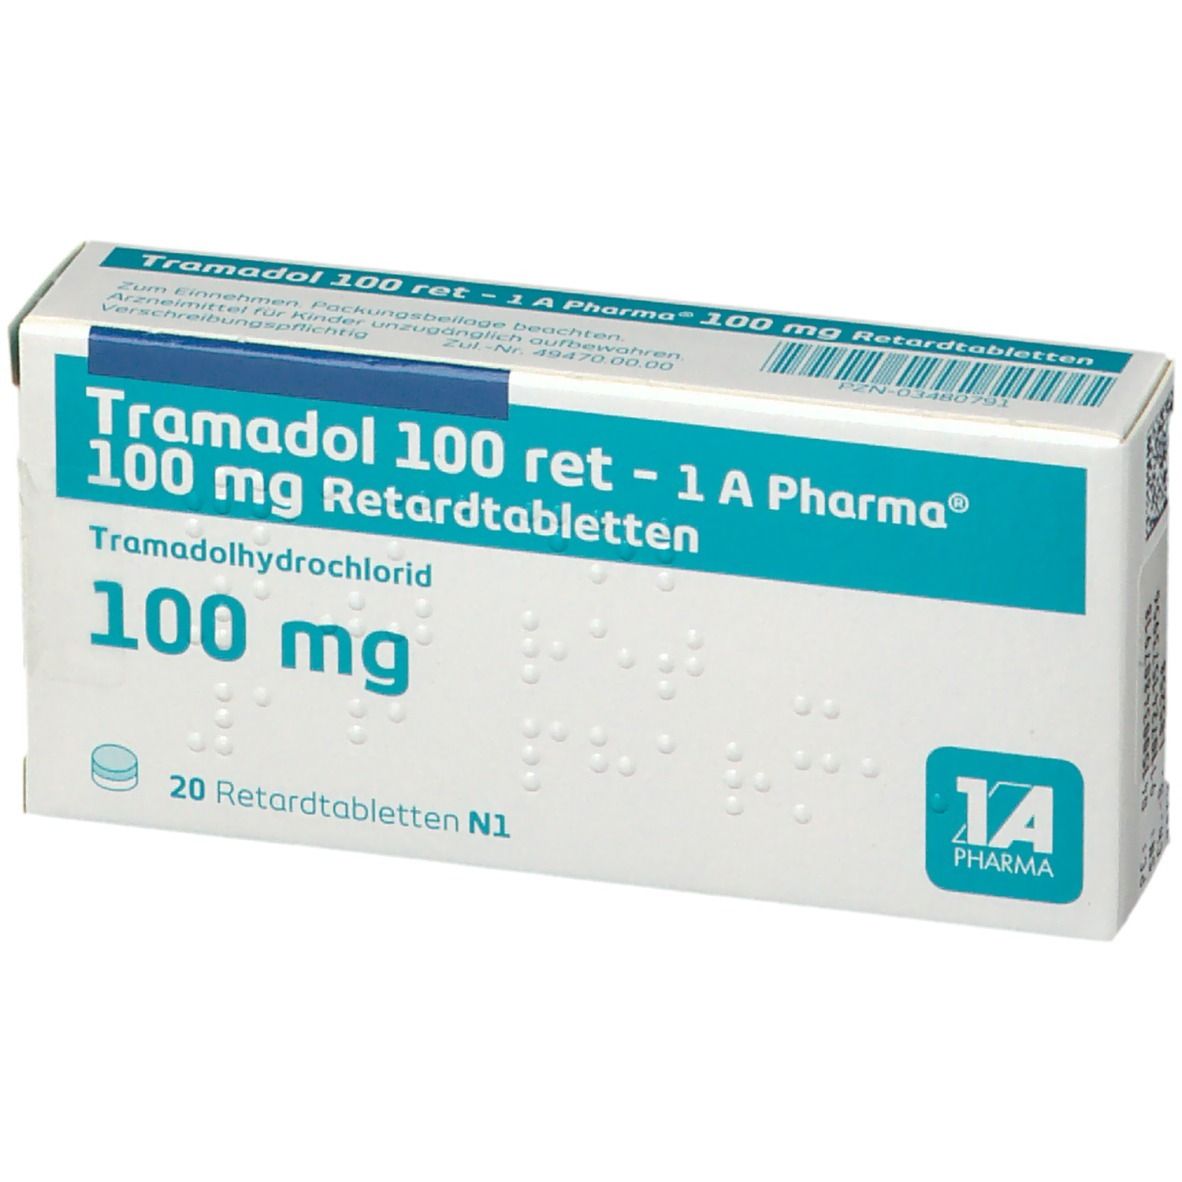 Tramadol 100  1A Pharma®